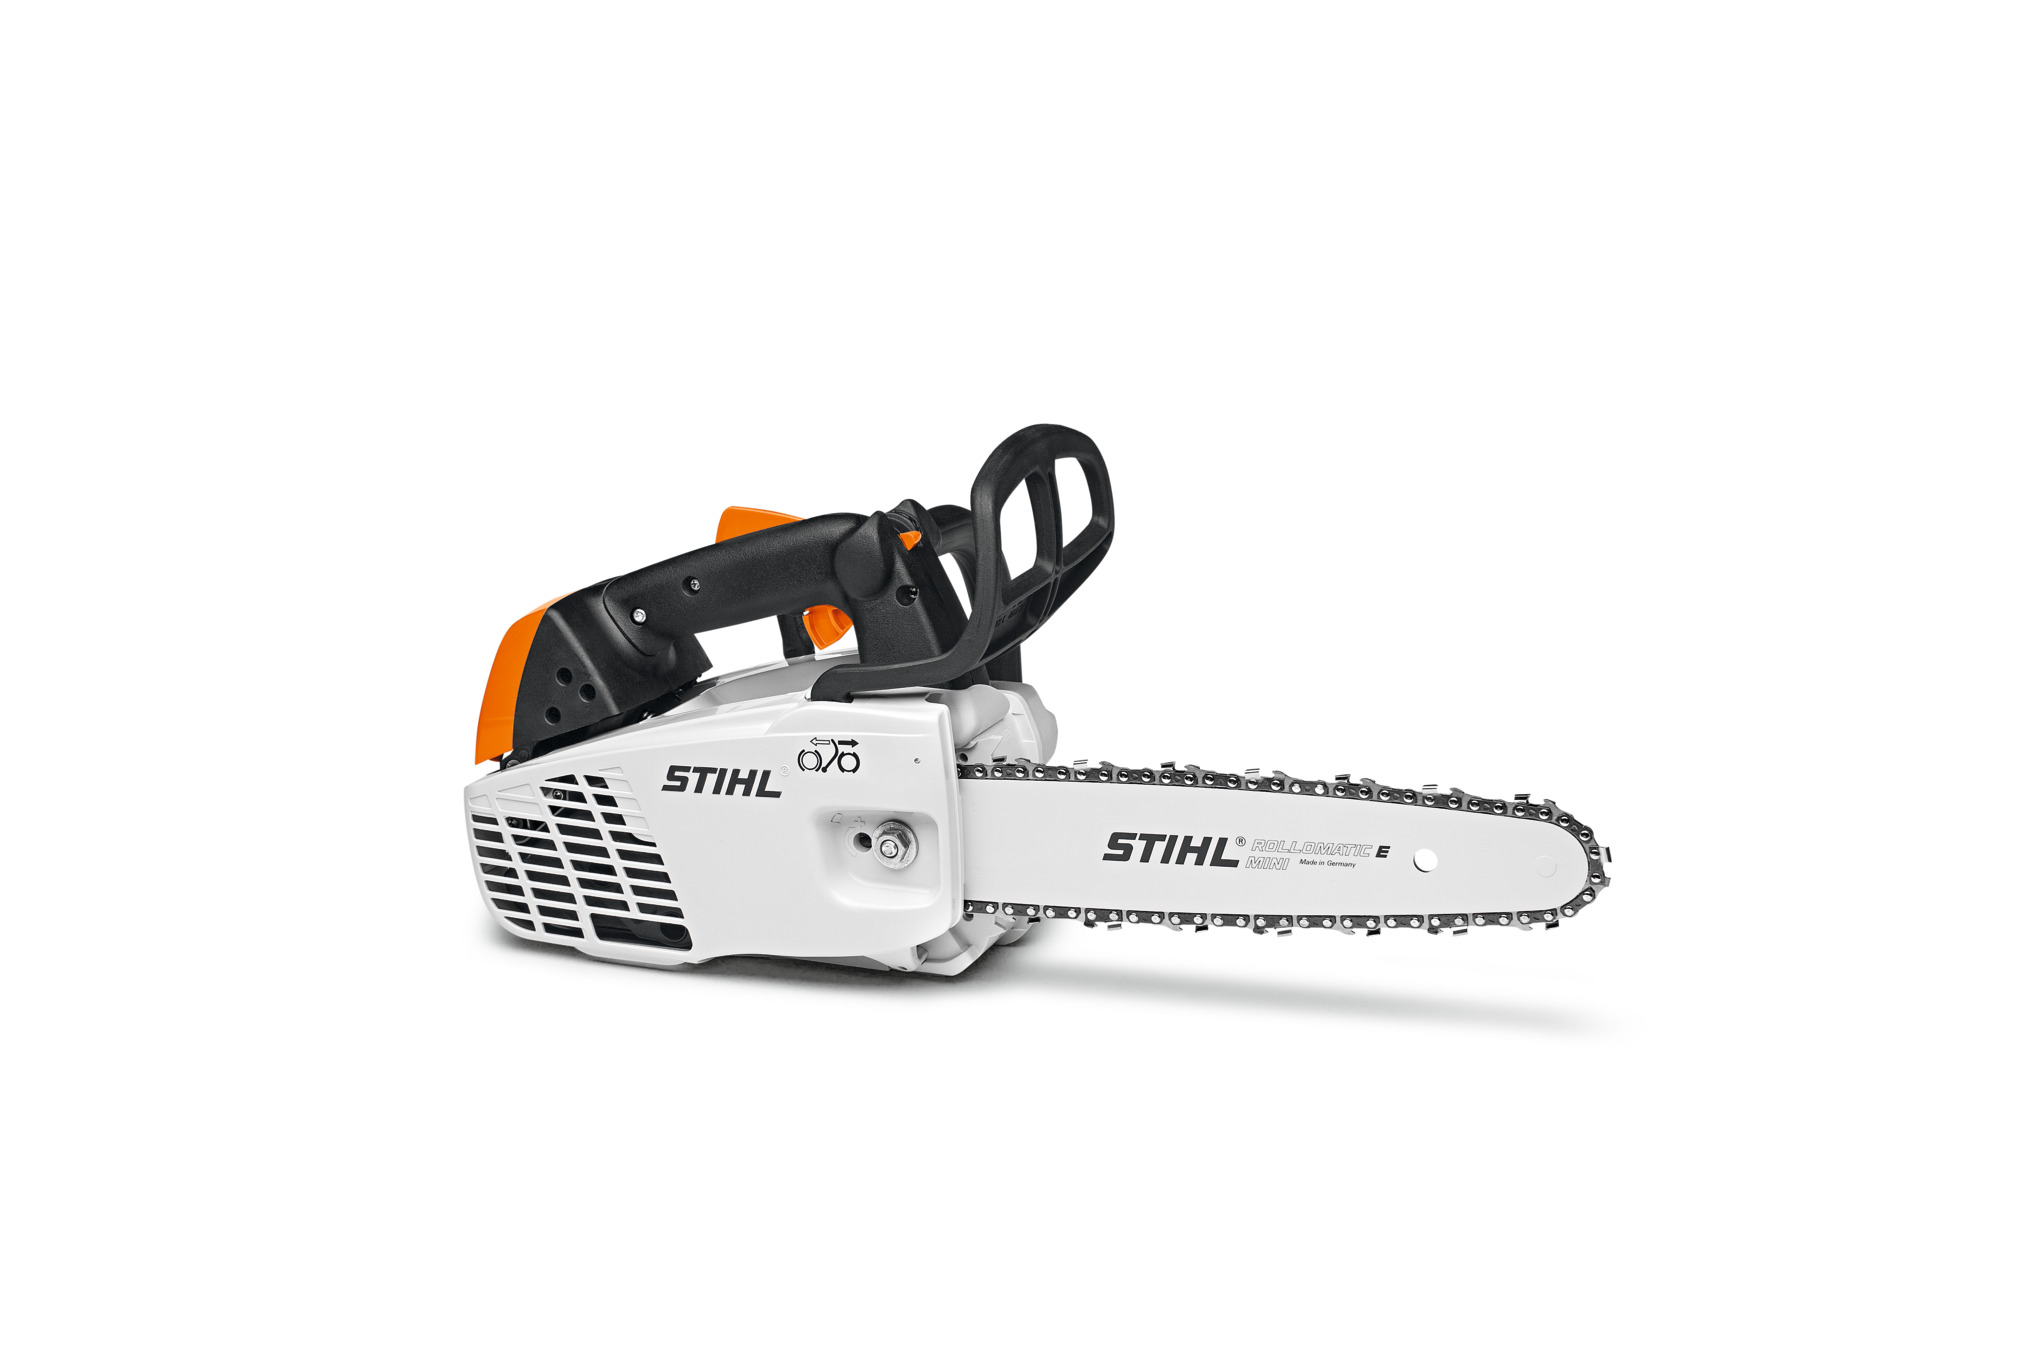 STIHL MS 311 Chainsaw - Fuel-Efficient Chainsaws